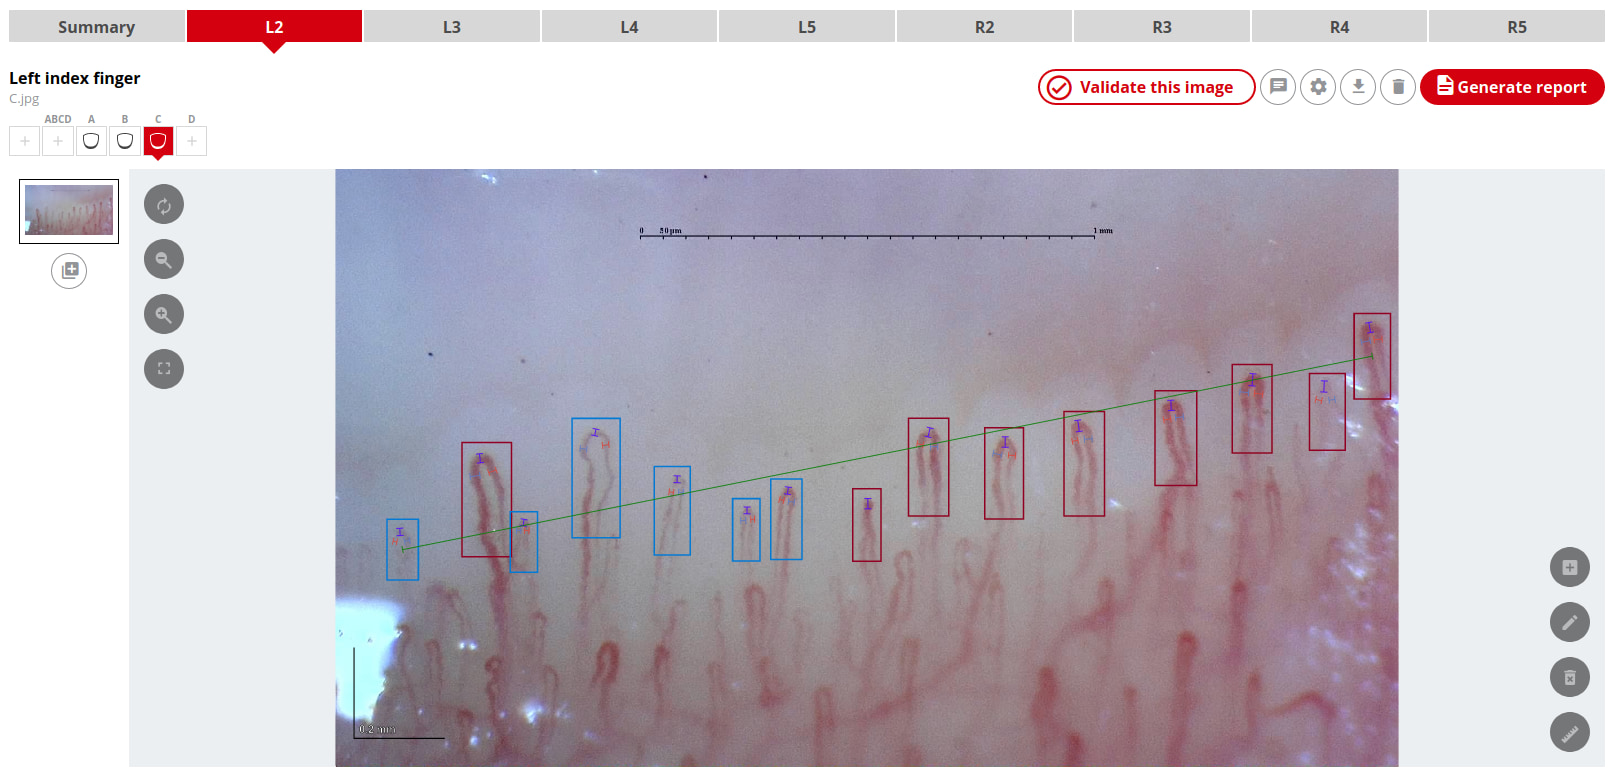 Smart G-Scope capillaroscopy example uploaded to Capillary.io for its analysis